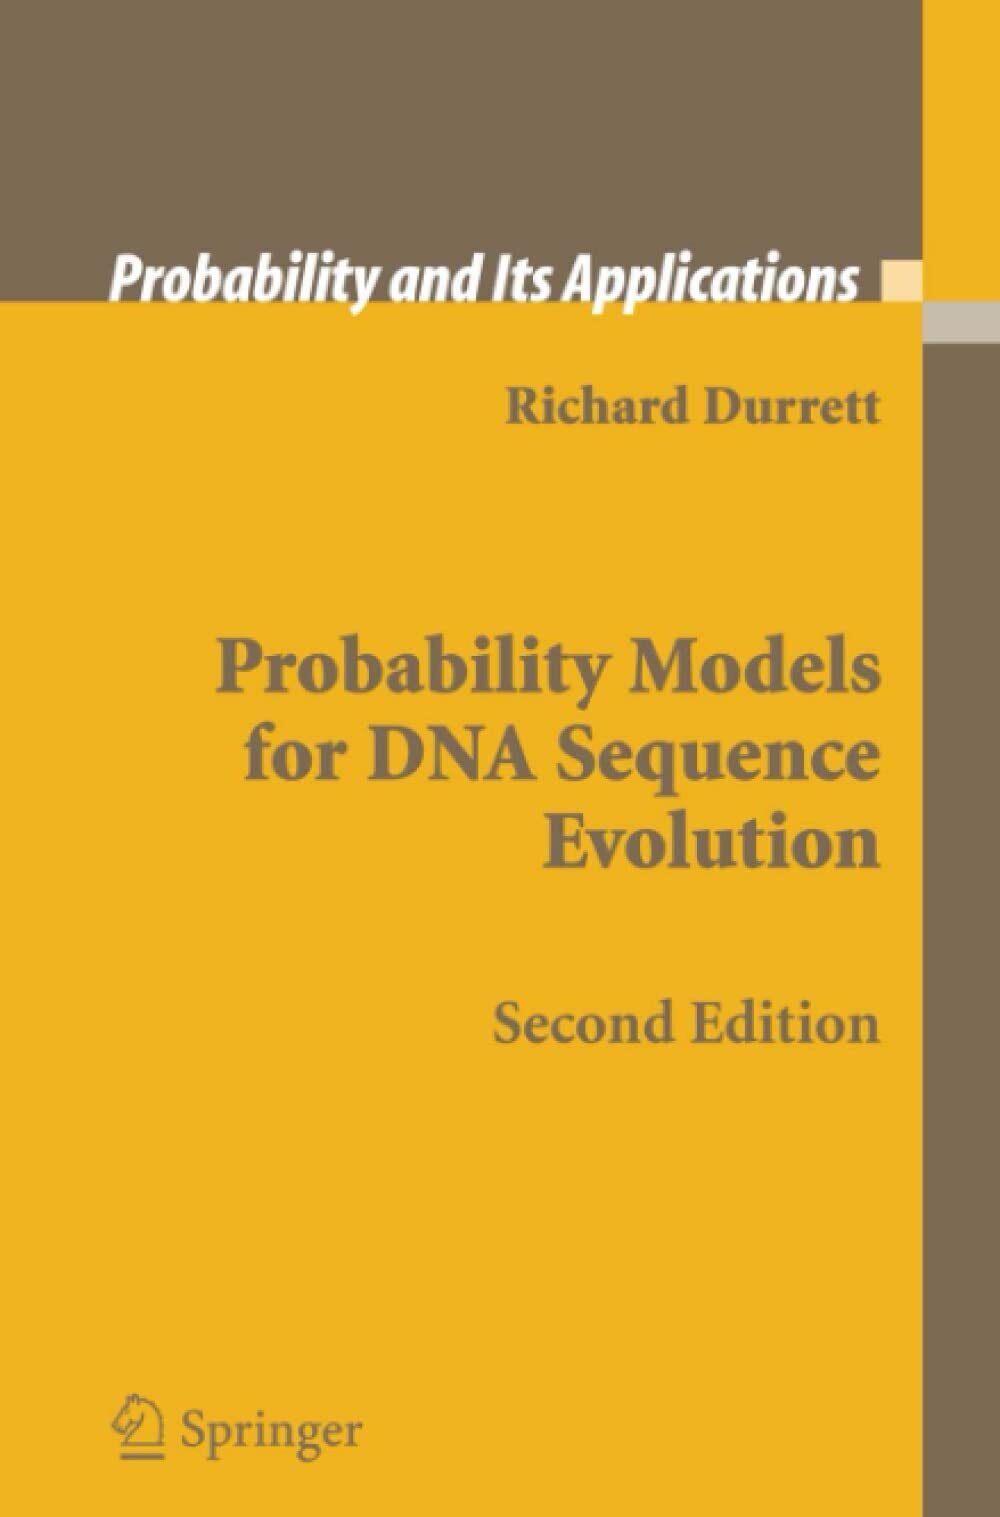 Probability Models for DNA Sequence Evolution - Richard Durrett - Springer, 2010 libro usato